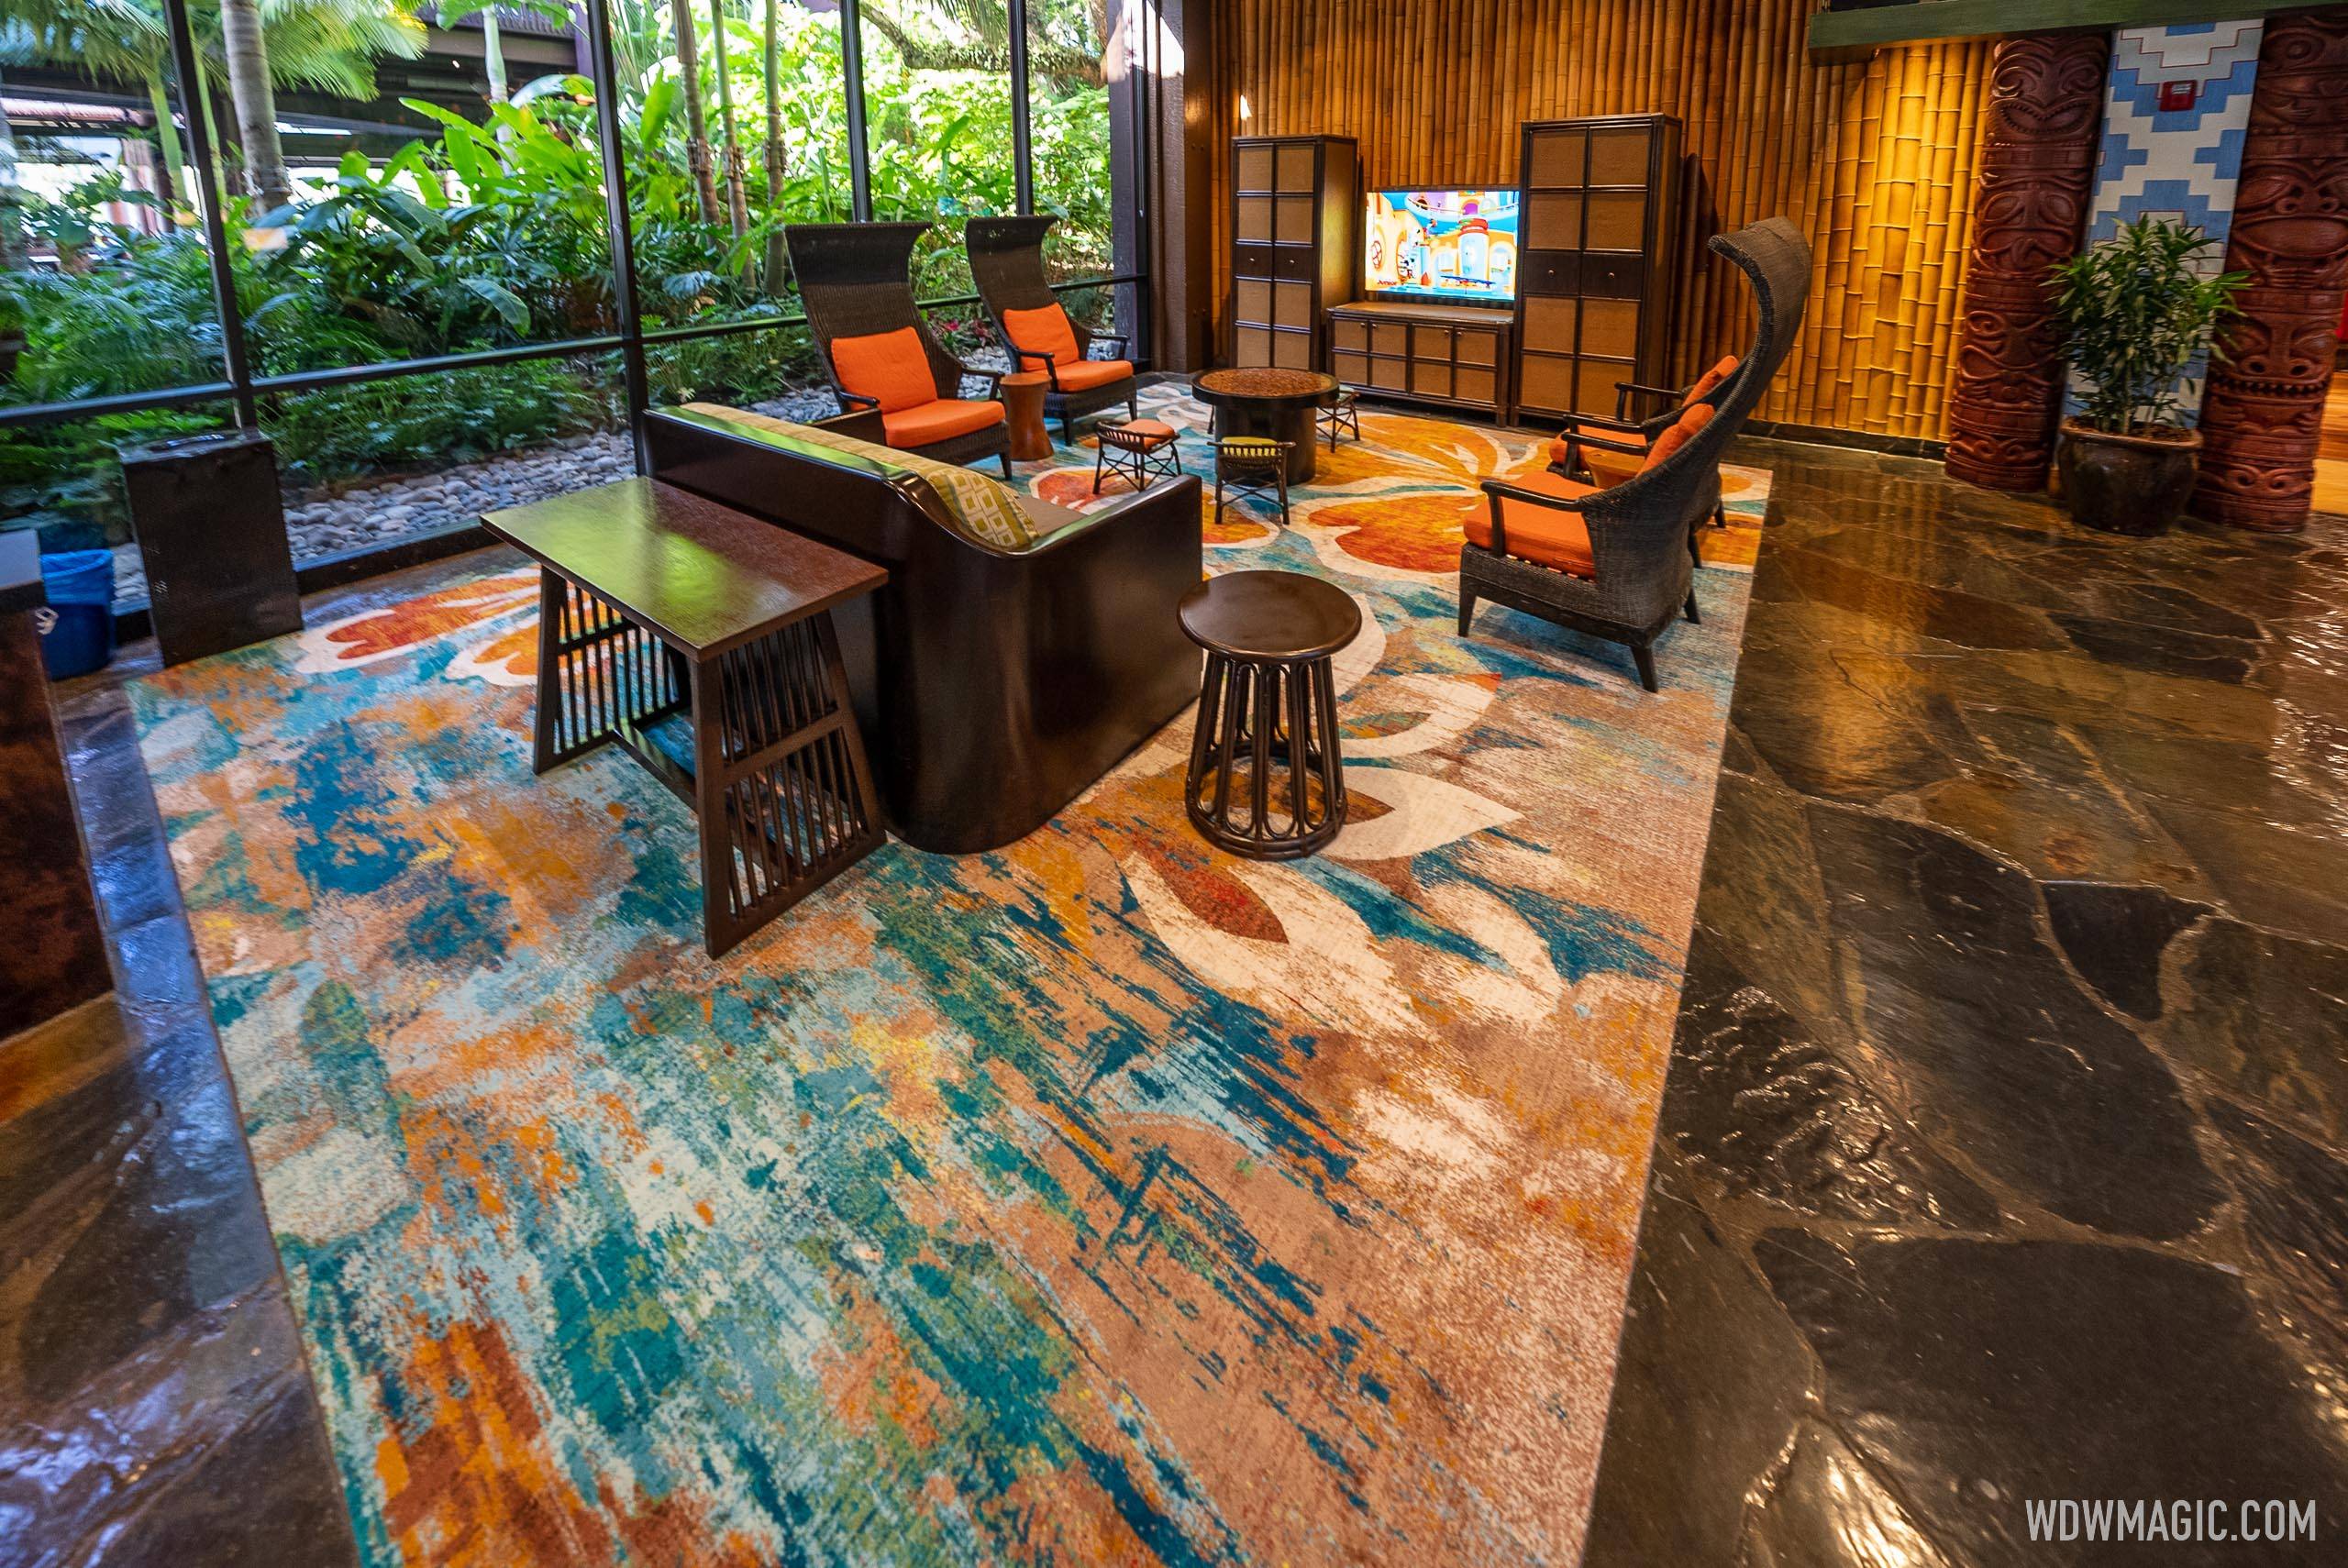 New rug color scheme at Disney's Polynesian Village Resort lobby